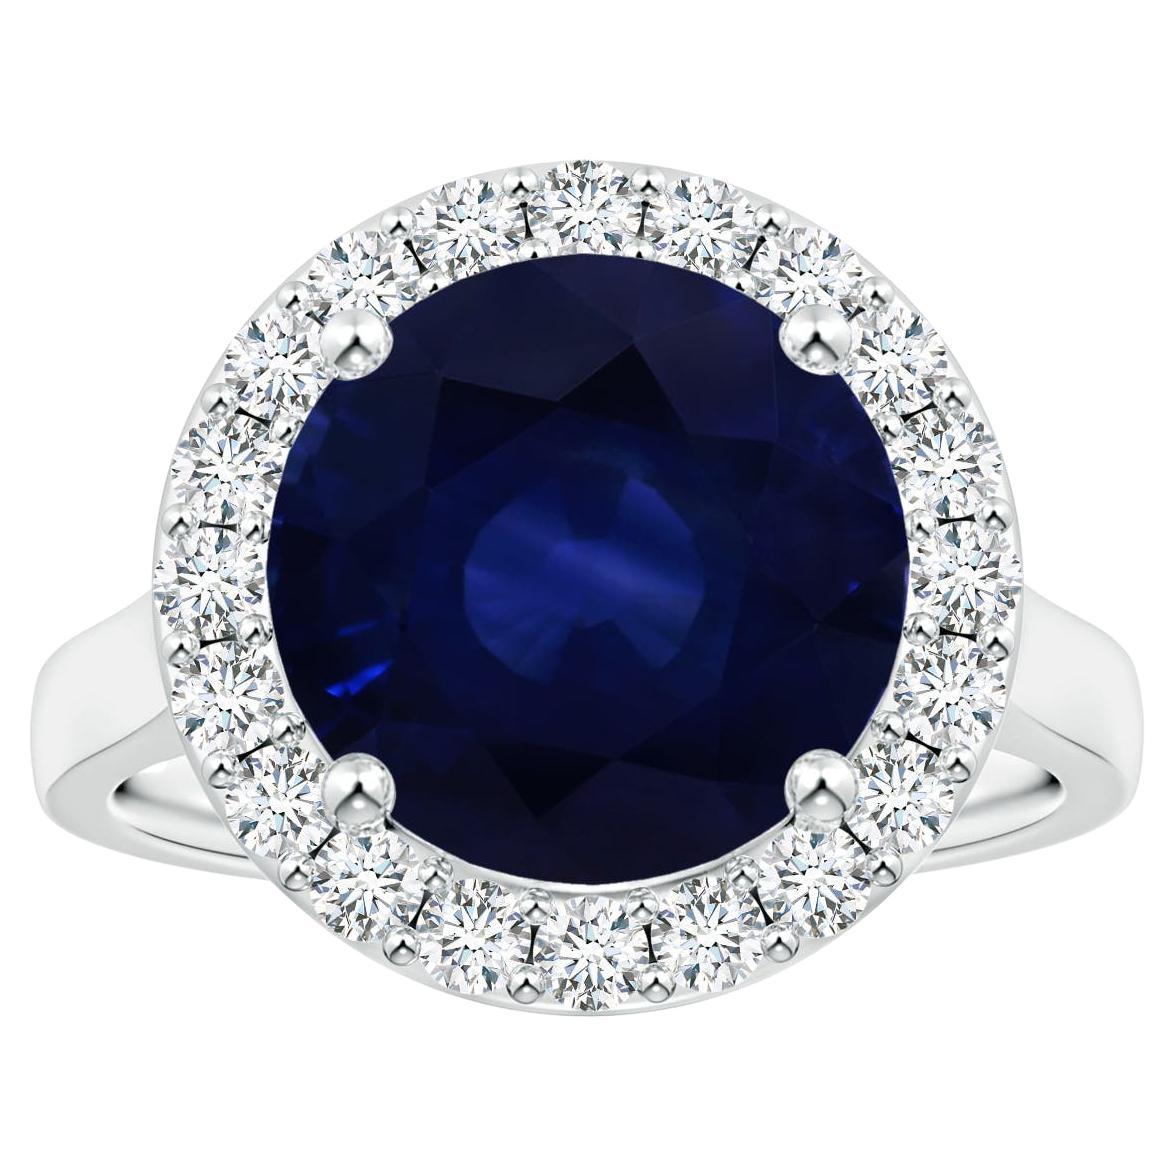 En vente :  ANGARA Bague en platine avec saphir bleu naturel certifié GIA de 6,63 carats et diamants